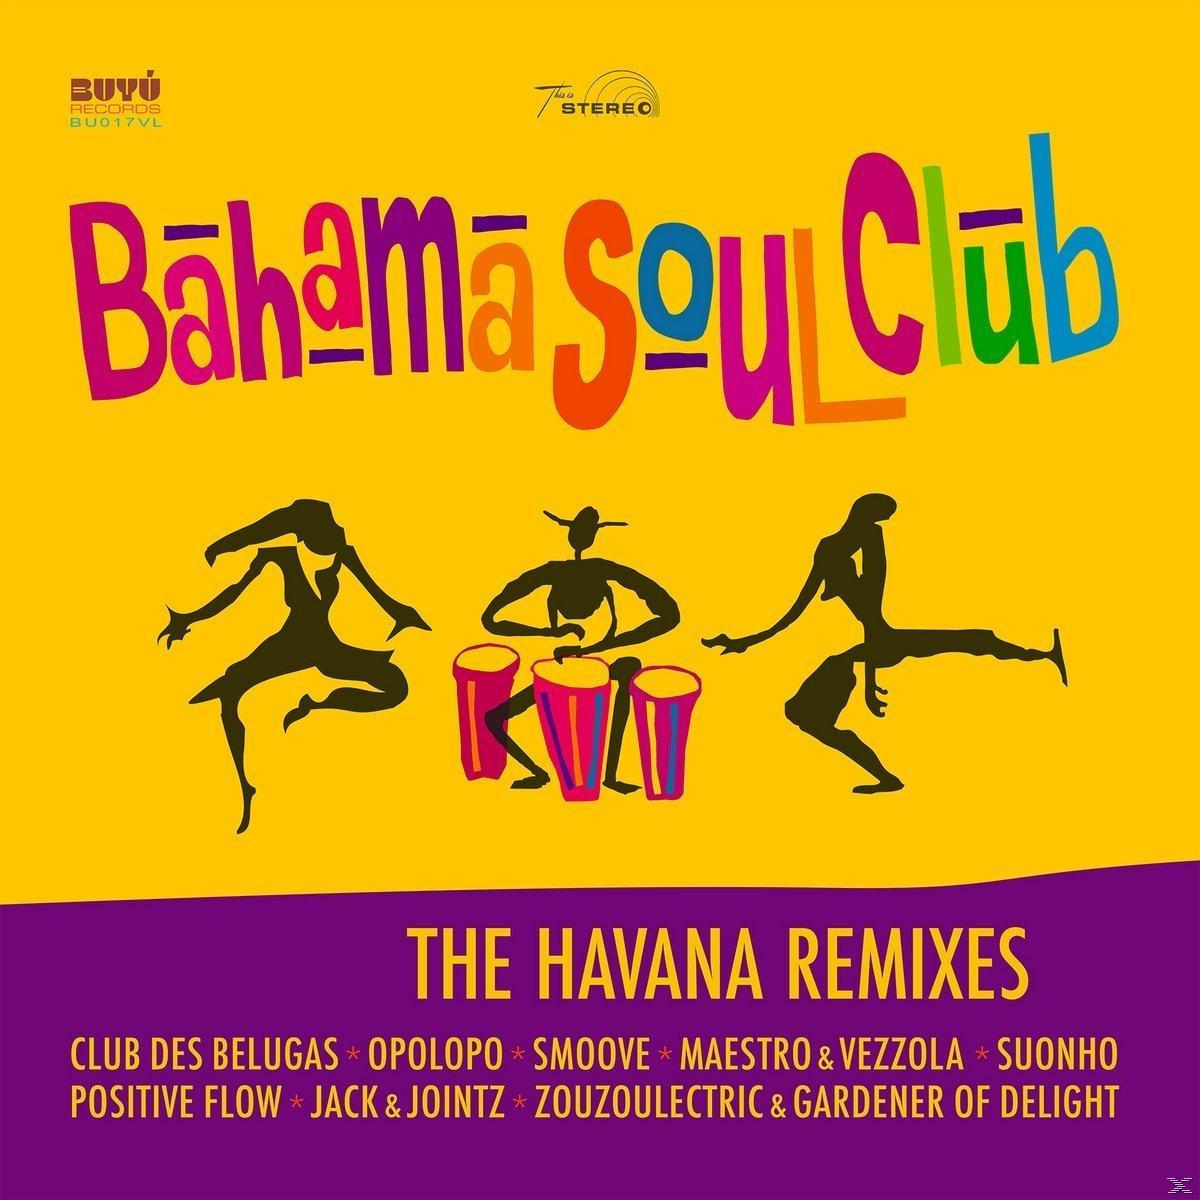 - Soul Club Bahama Remixes The Havana The (Vinyl) gr.LP (180 -